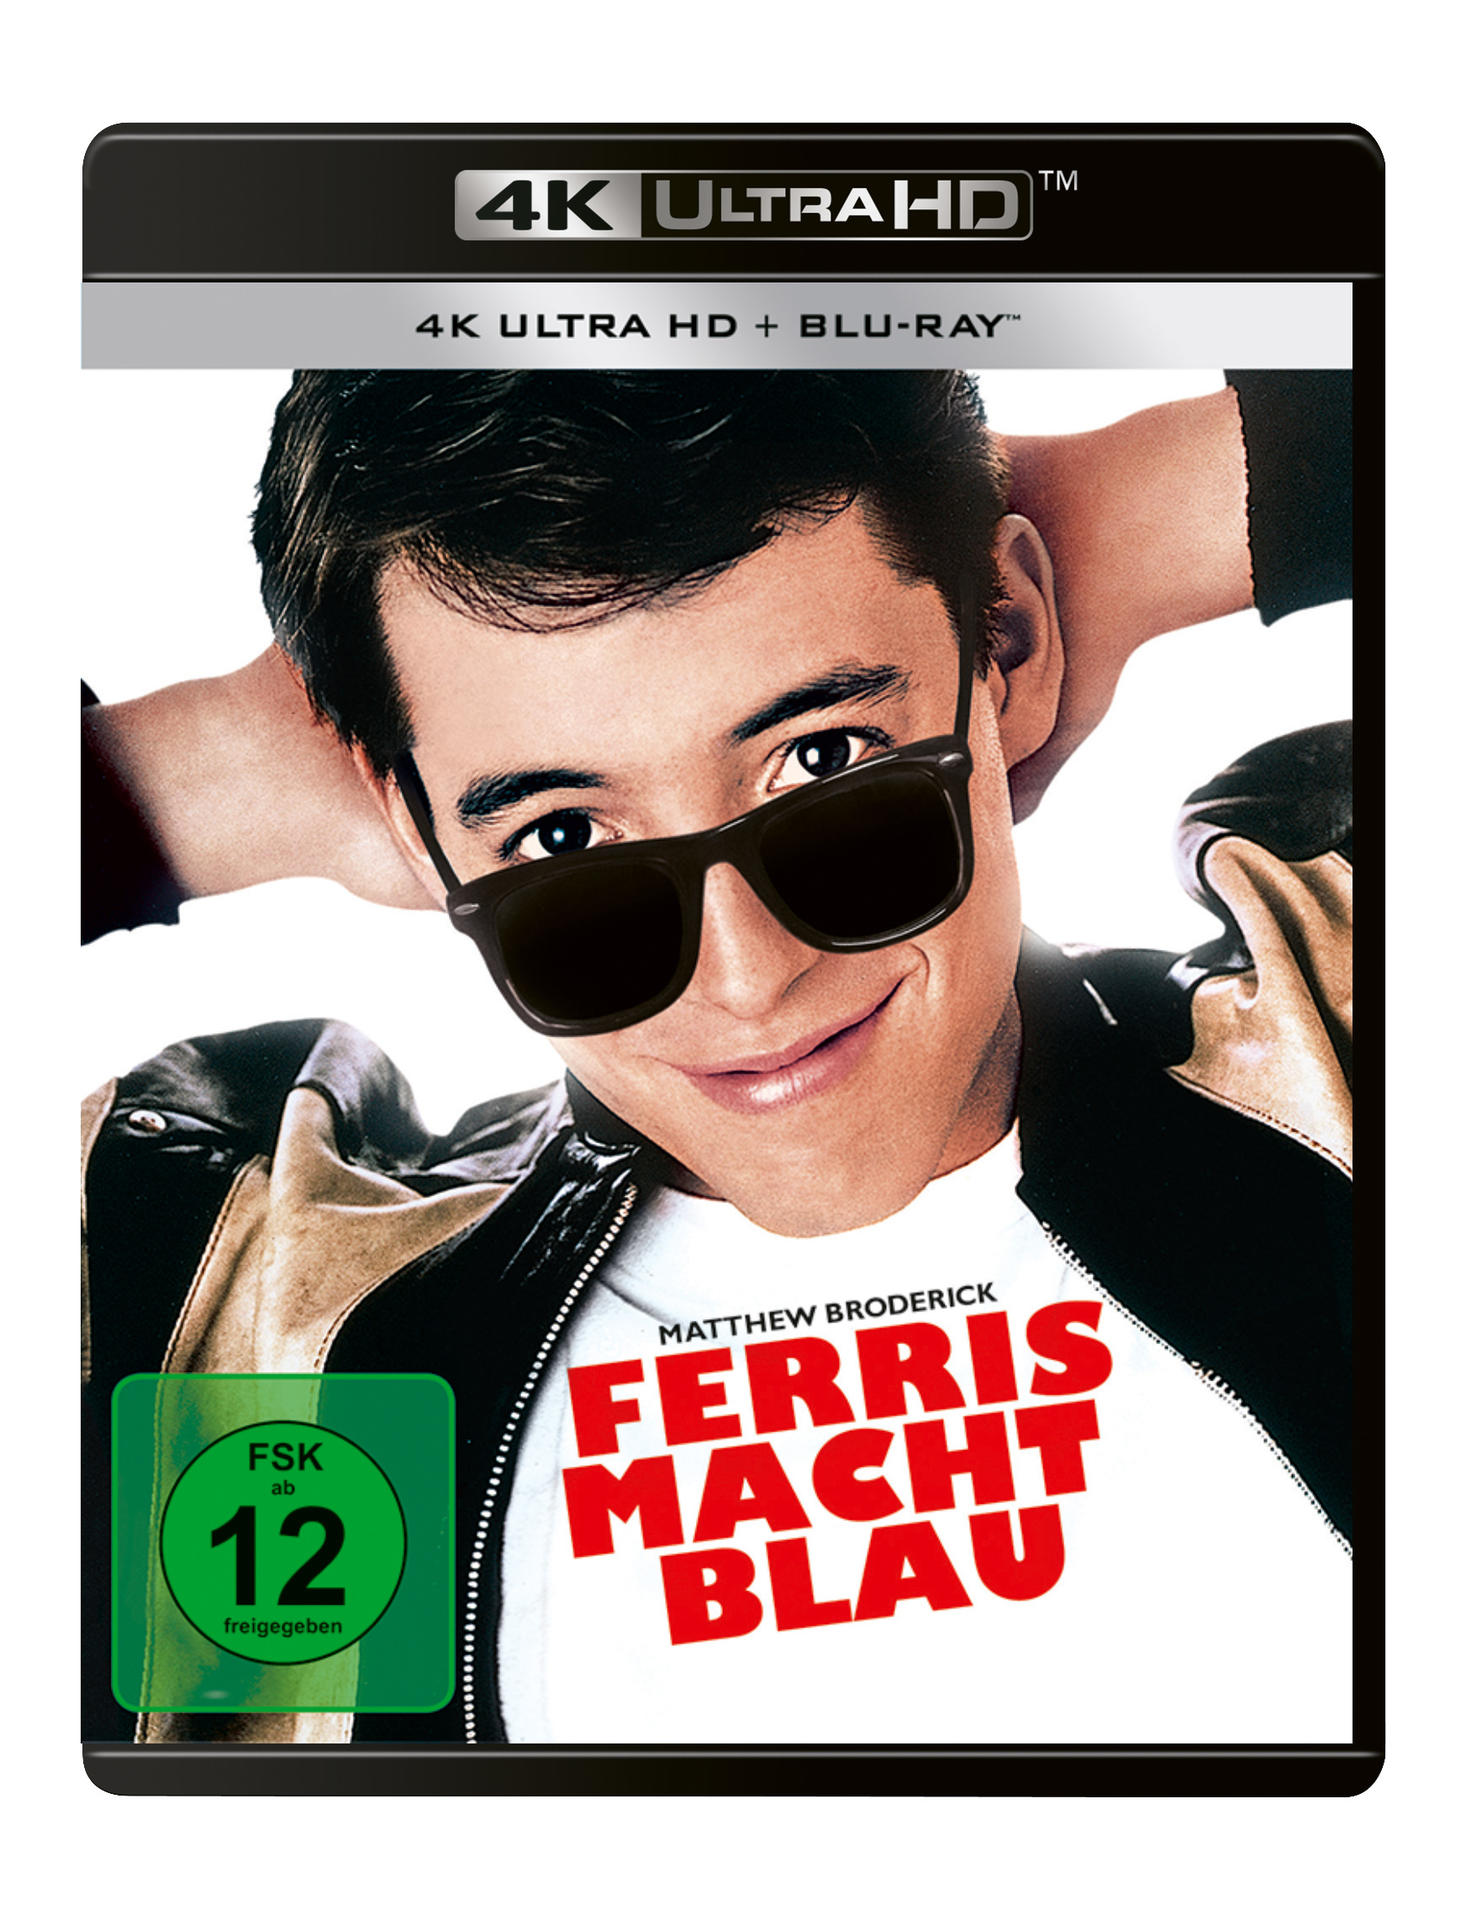 Blu-ray blau 4K macht HD Ultra Ferris